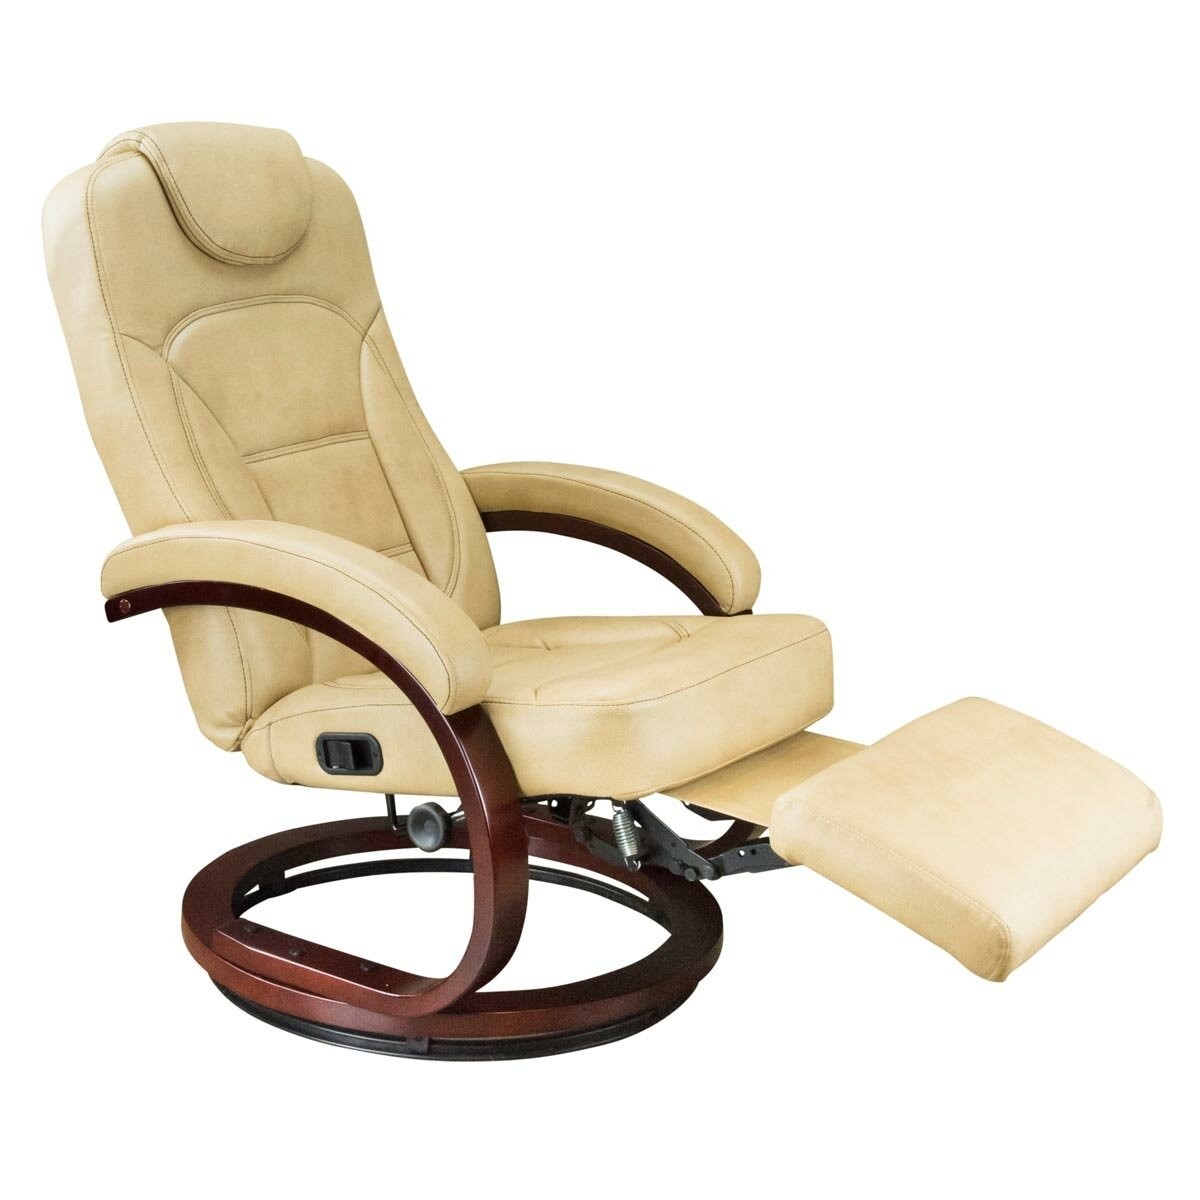 Thomas payne furniture euro chair recliner